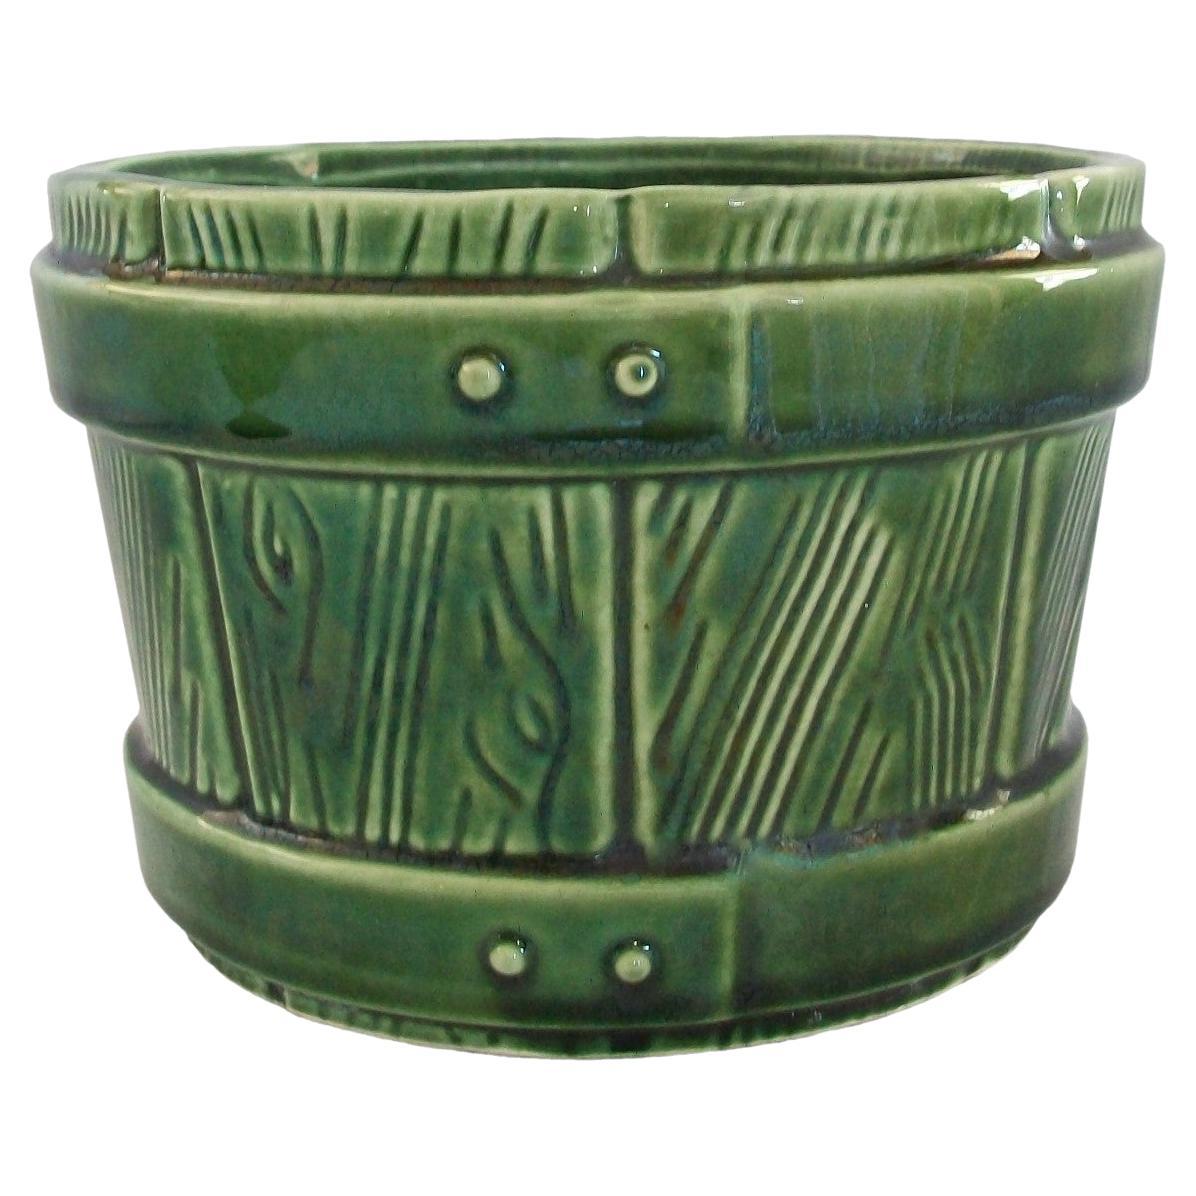 UNGEMACH POTTERY CO. Vintage-Pflanzgefäß „Faux Bois“ aus Keramik – USA – ca. 1950er Jahre